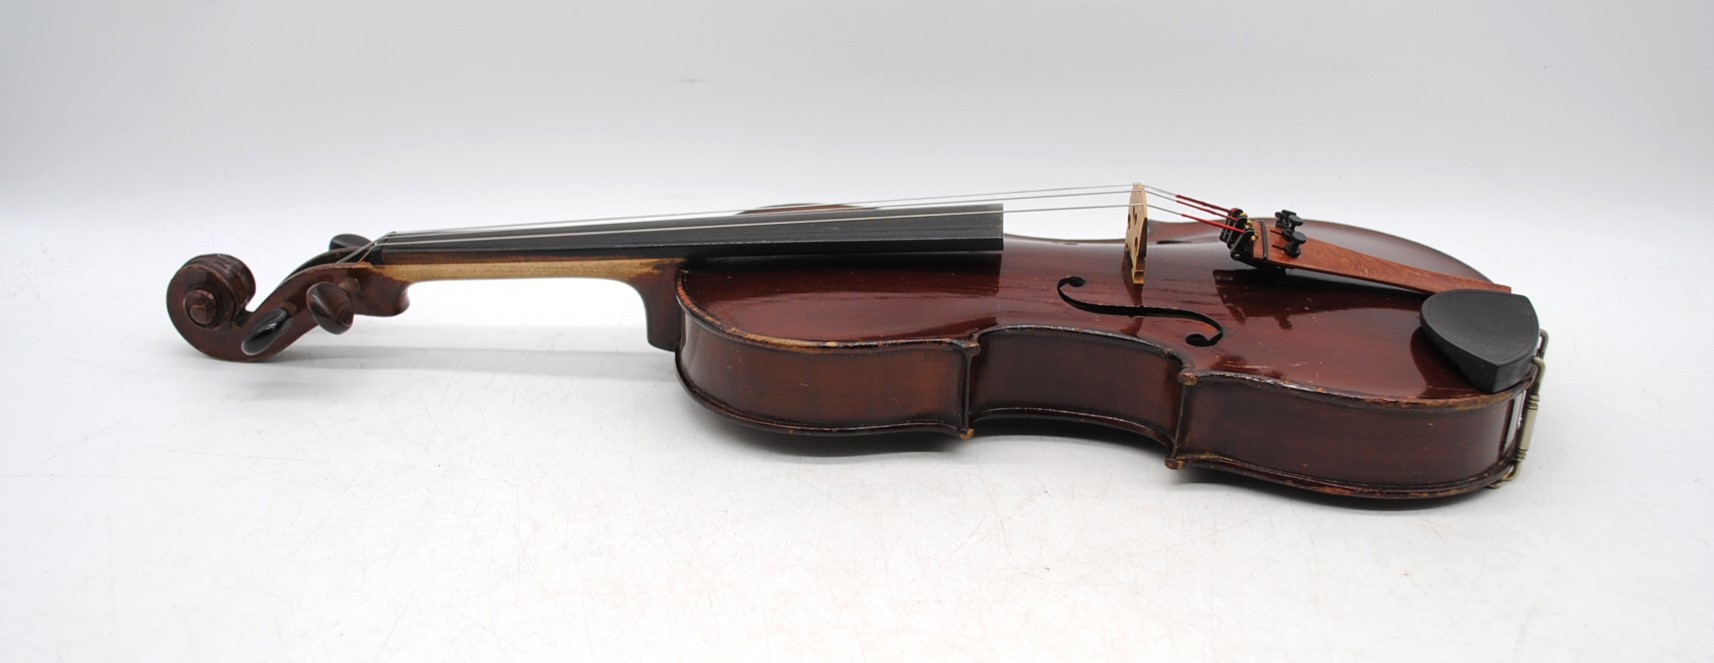 A 3/4 size violin, with Skylark Brand hard case - length of violin 56cm - Image 7 of 12